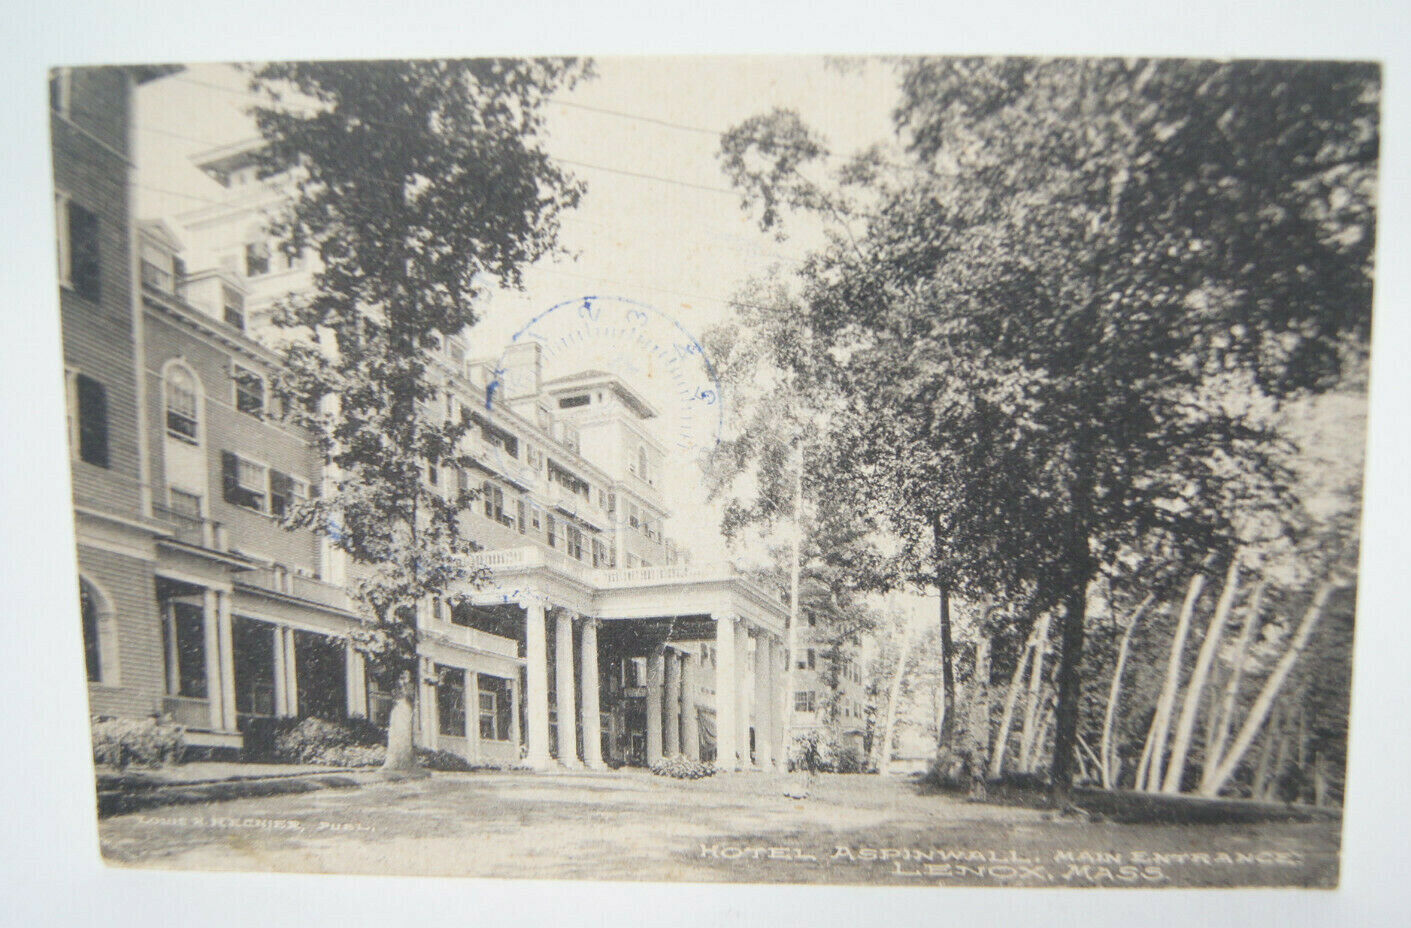 Hotel Aspinwall Main Entrance Lenox Massachusetts Regnier Vintage Postcard RPPC